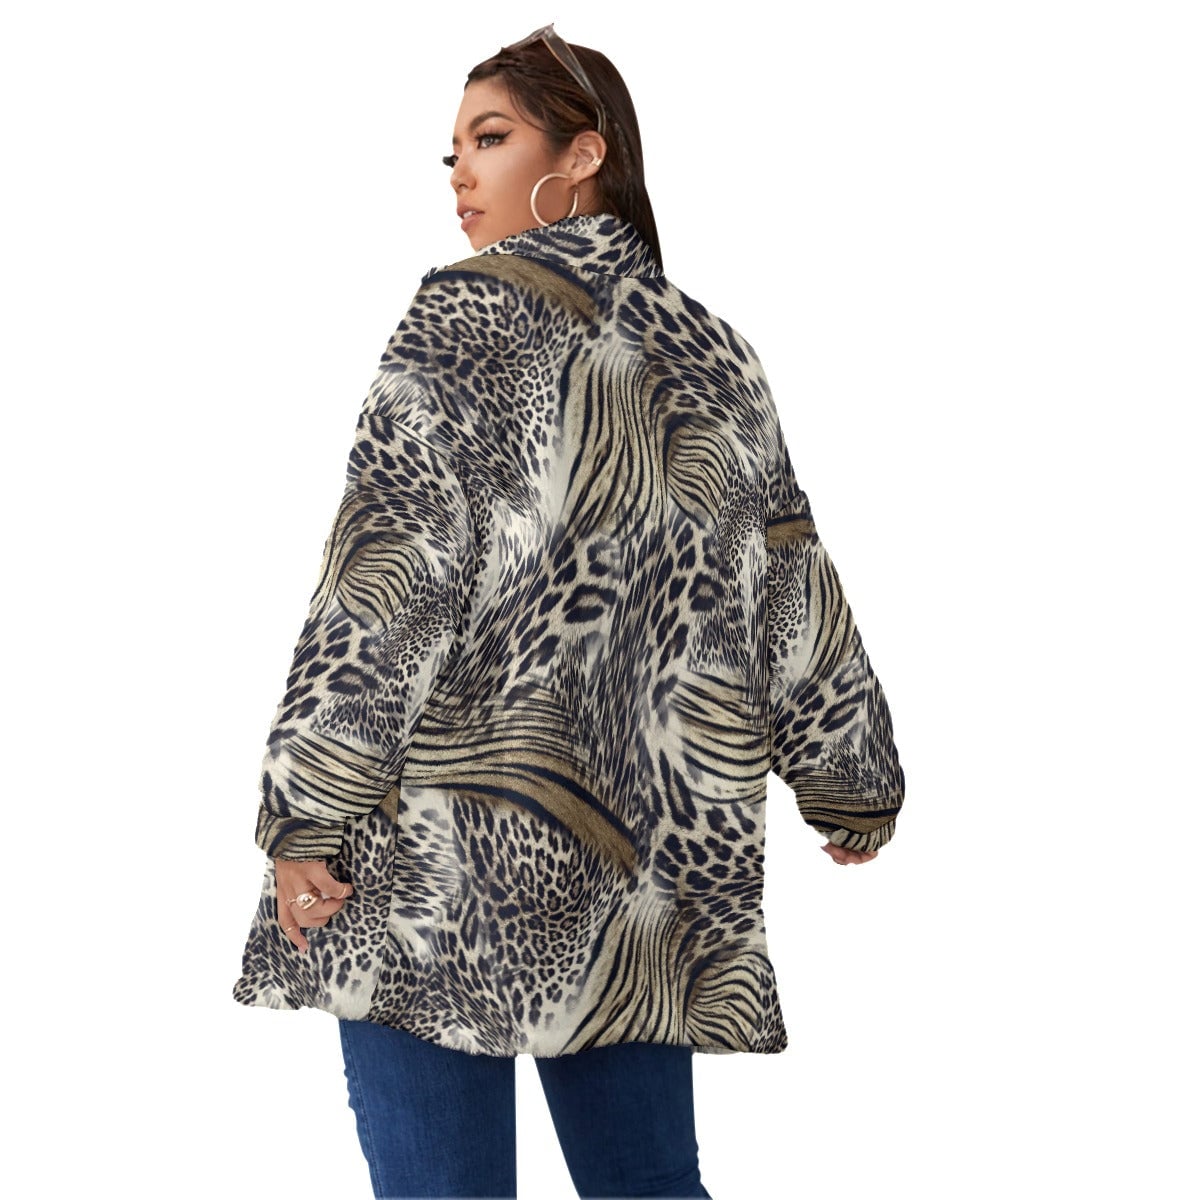 Golden Leopard Print Fashion Women’s Borg Fleece Oversize Jacket